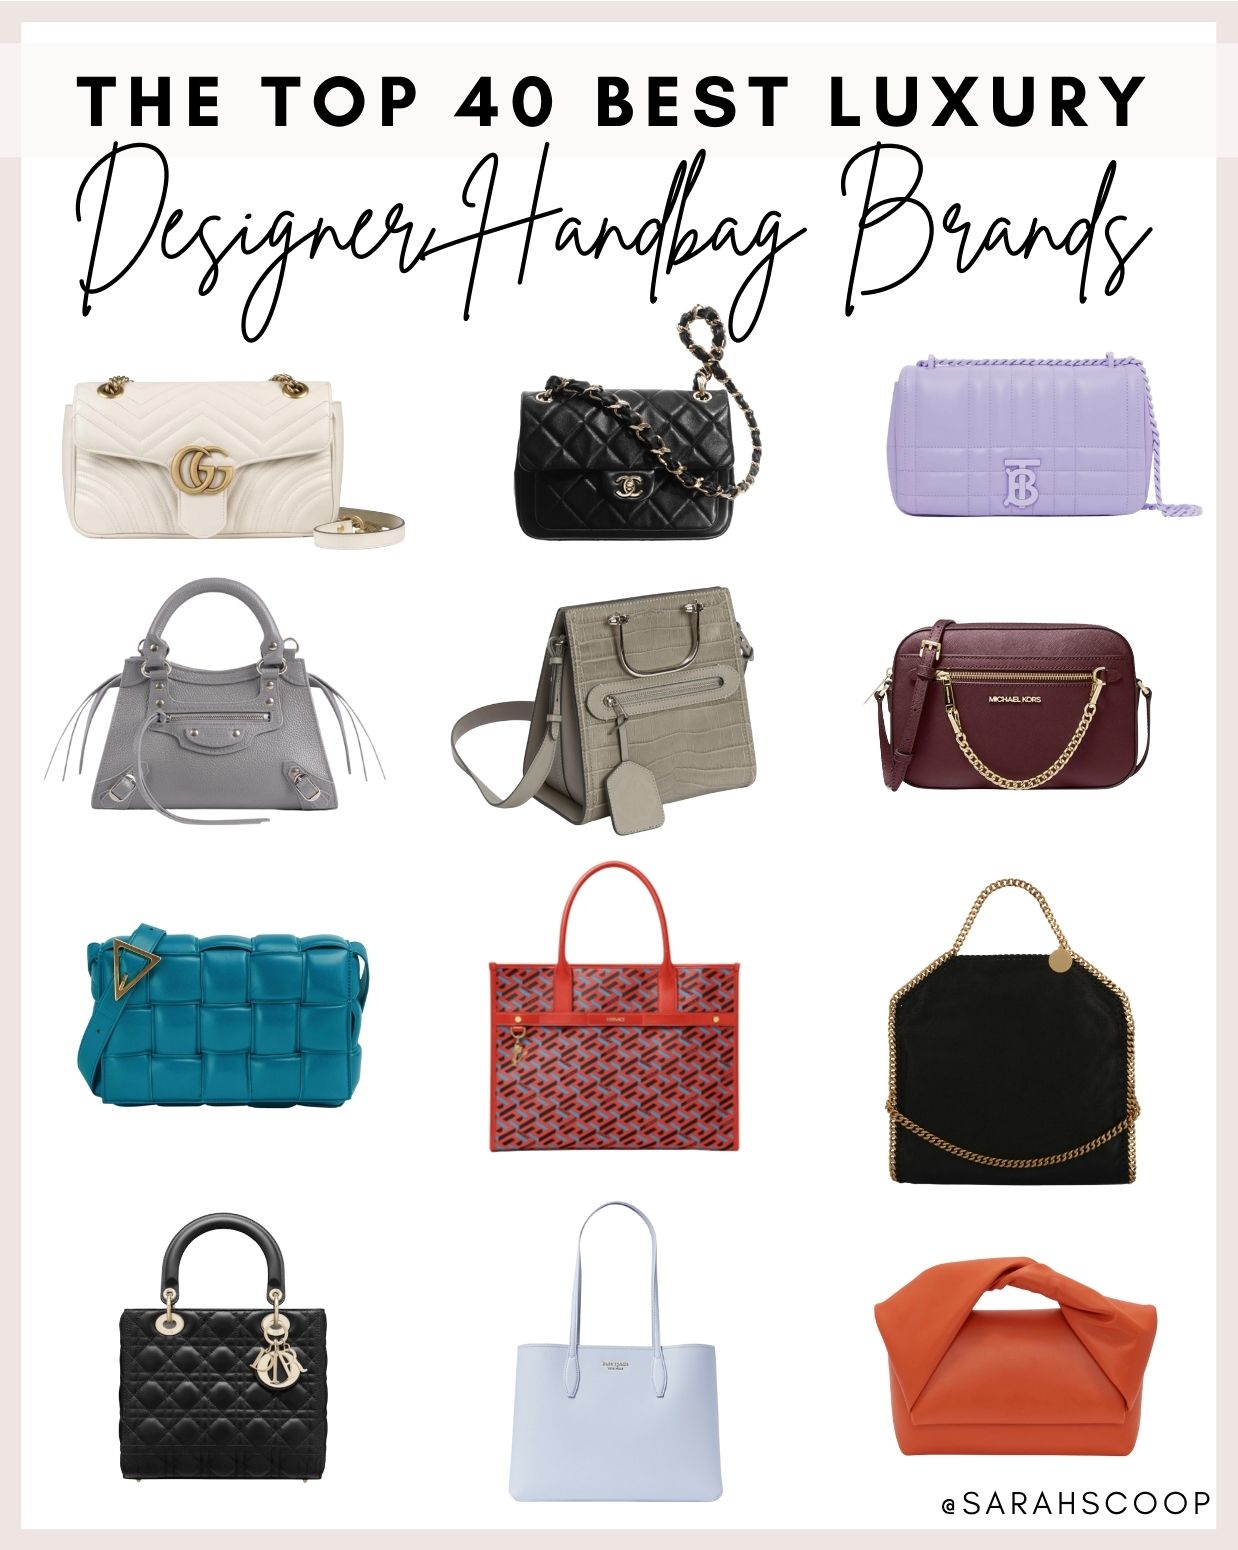 Authentic A Birkin Handbag with Handbag Zippers – 15 Inch | Jenama Handbag